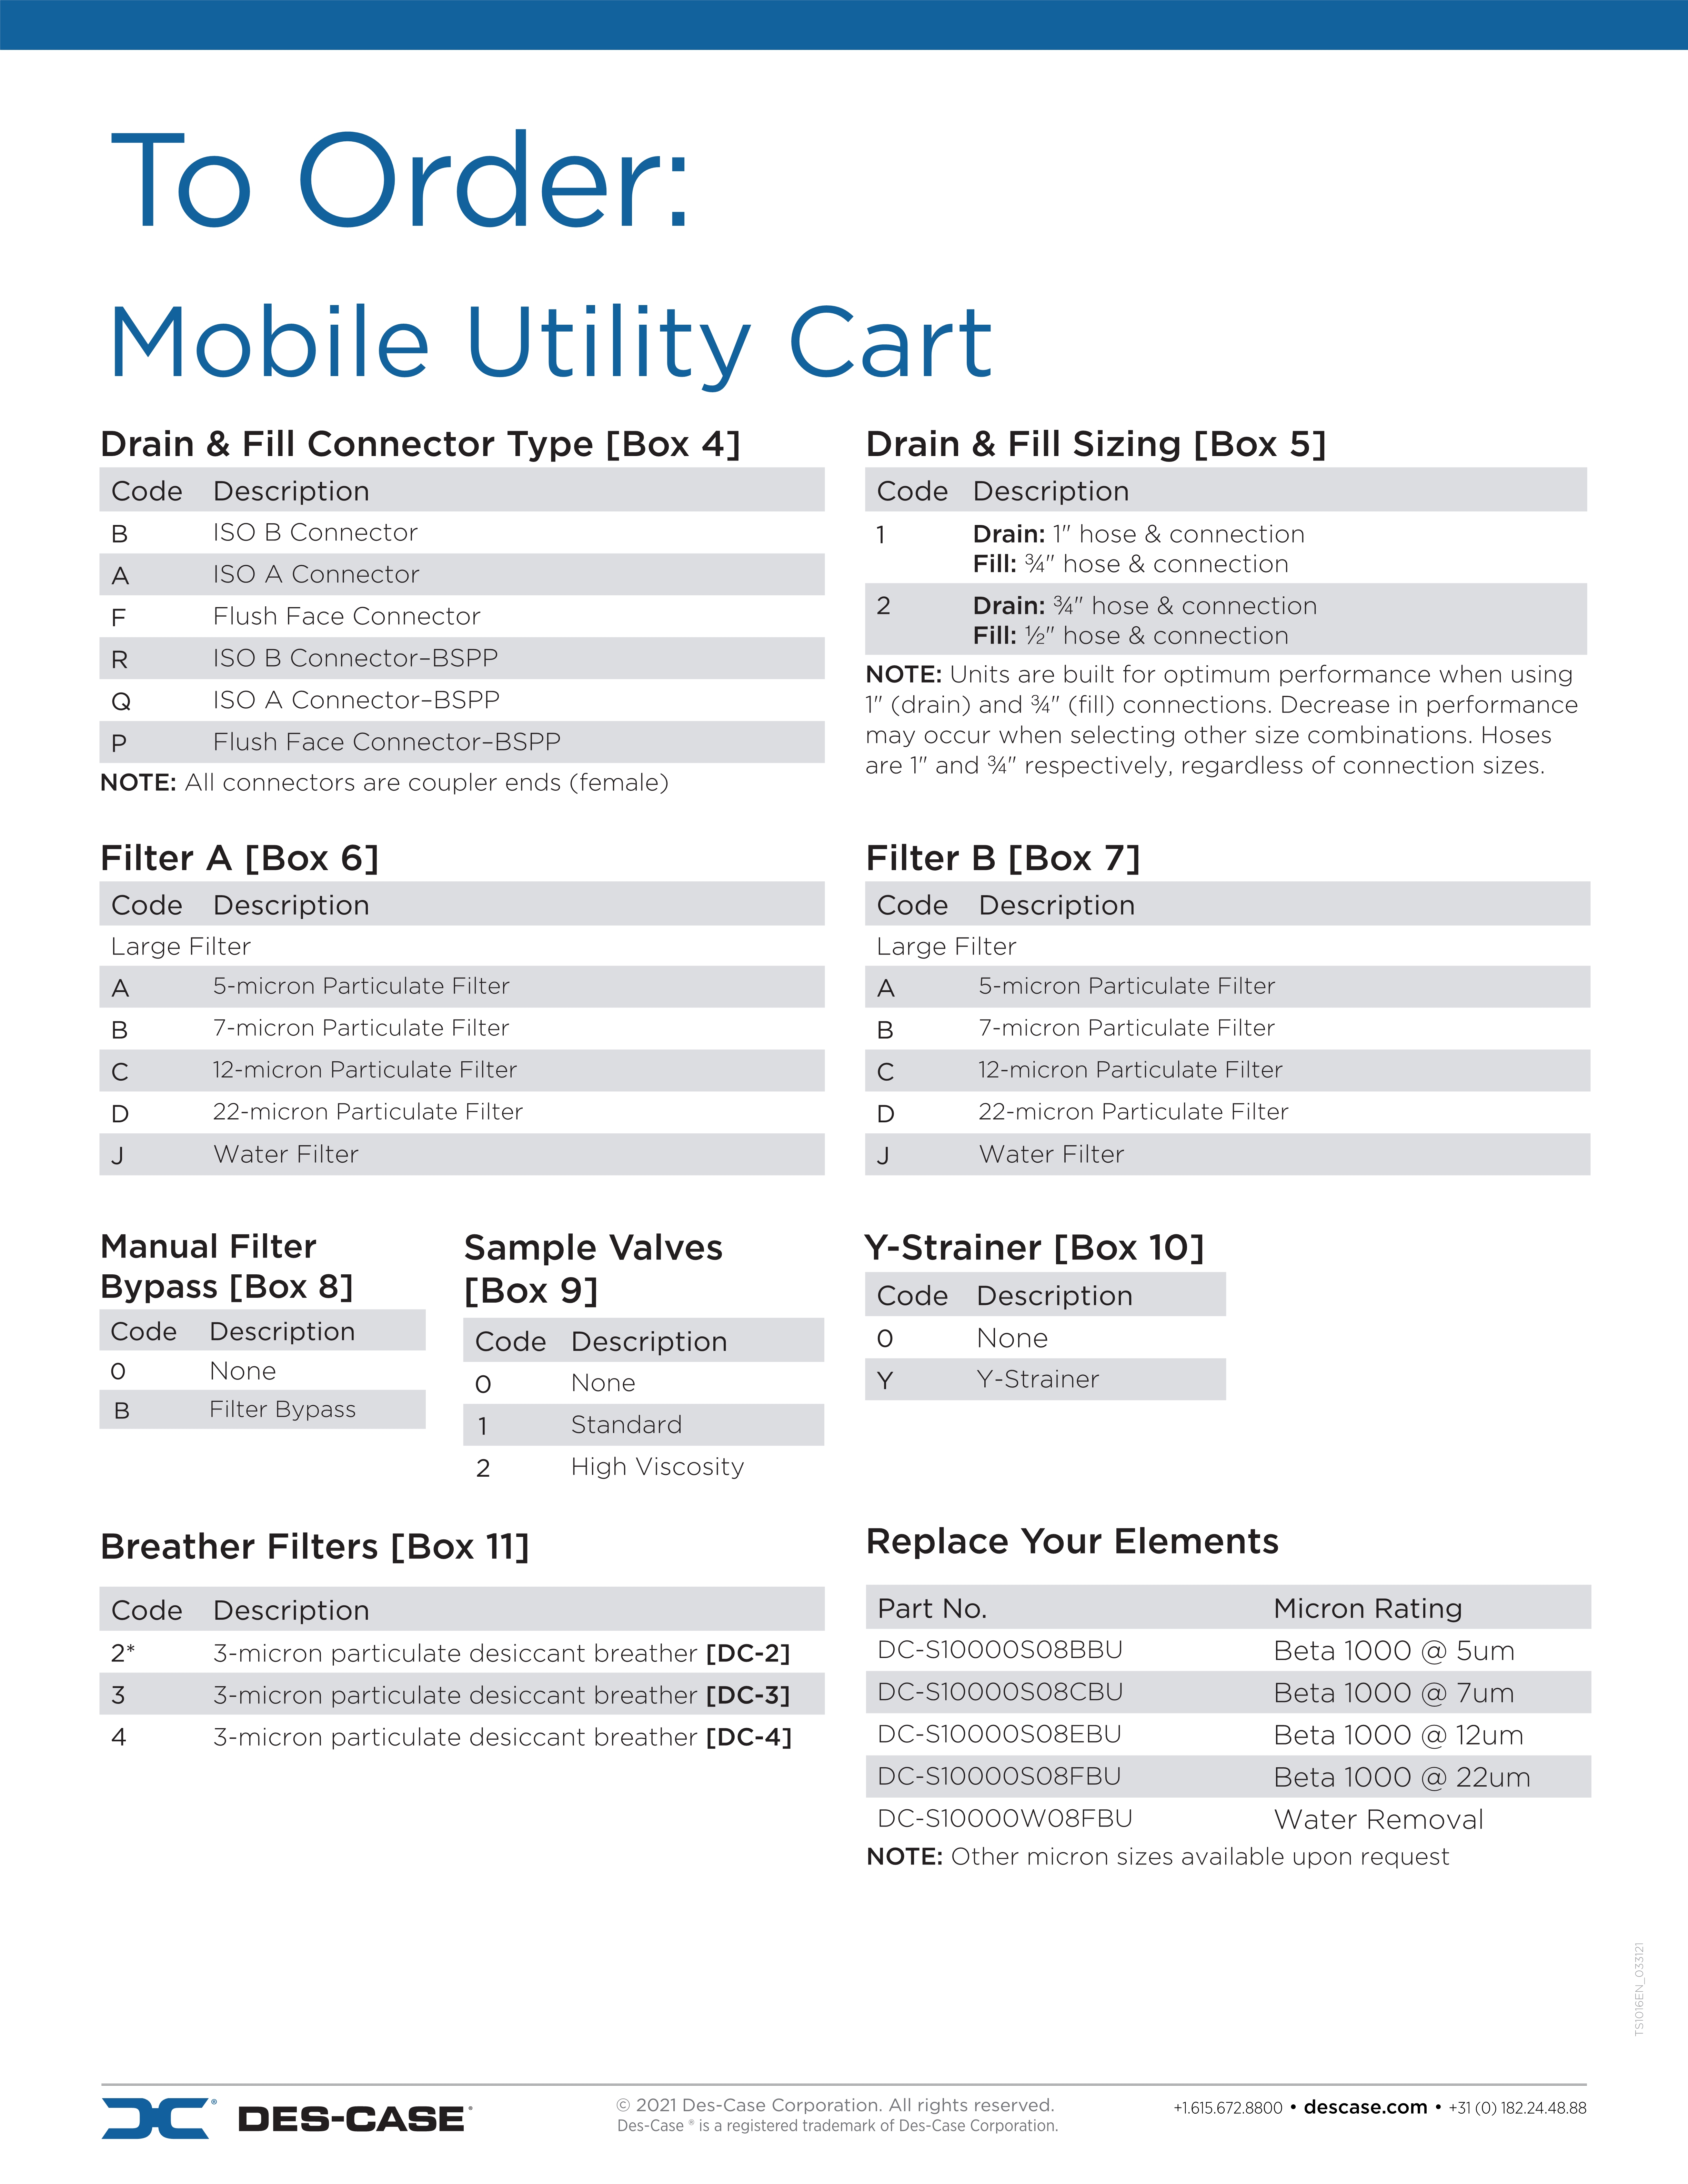 Mobile-Utility-Cart-Tech-Sheet_EN_4.jpg